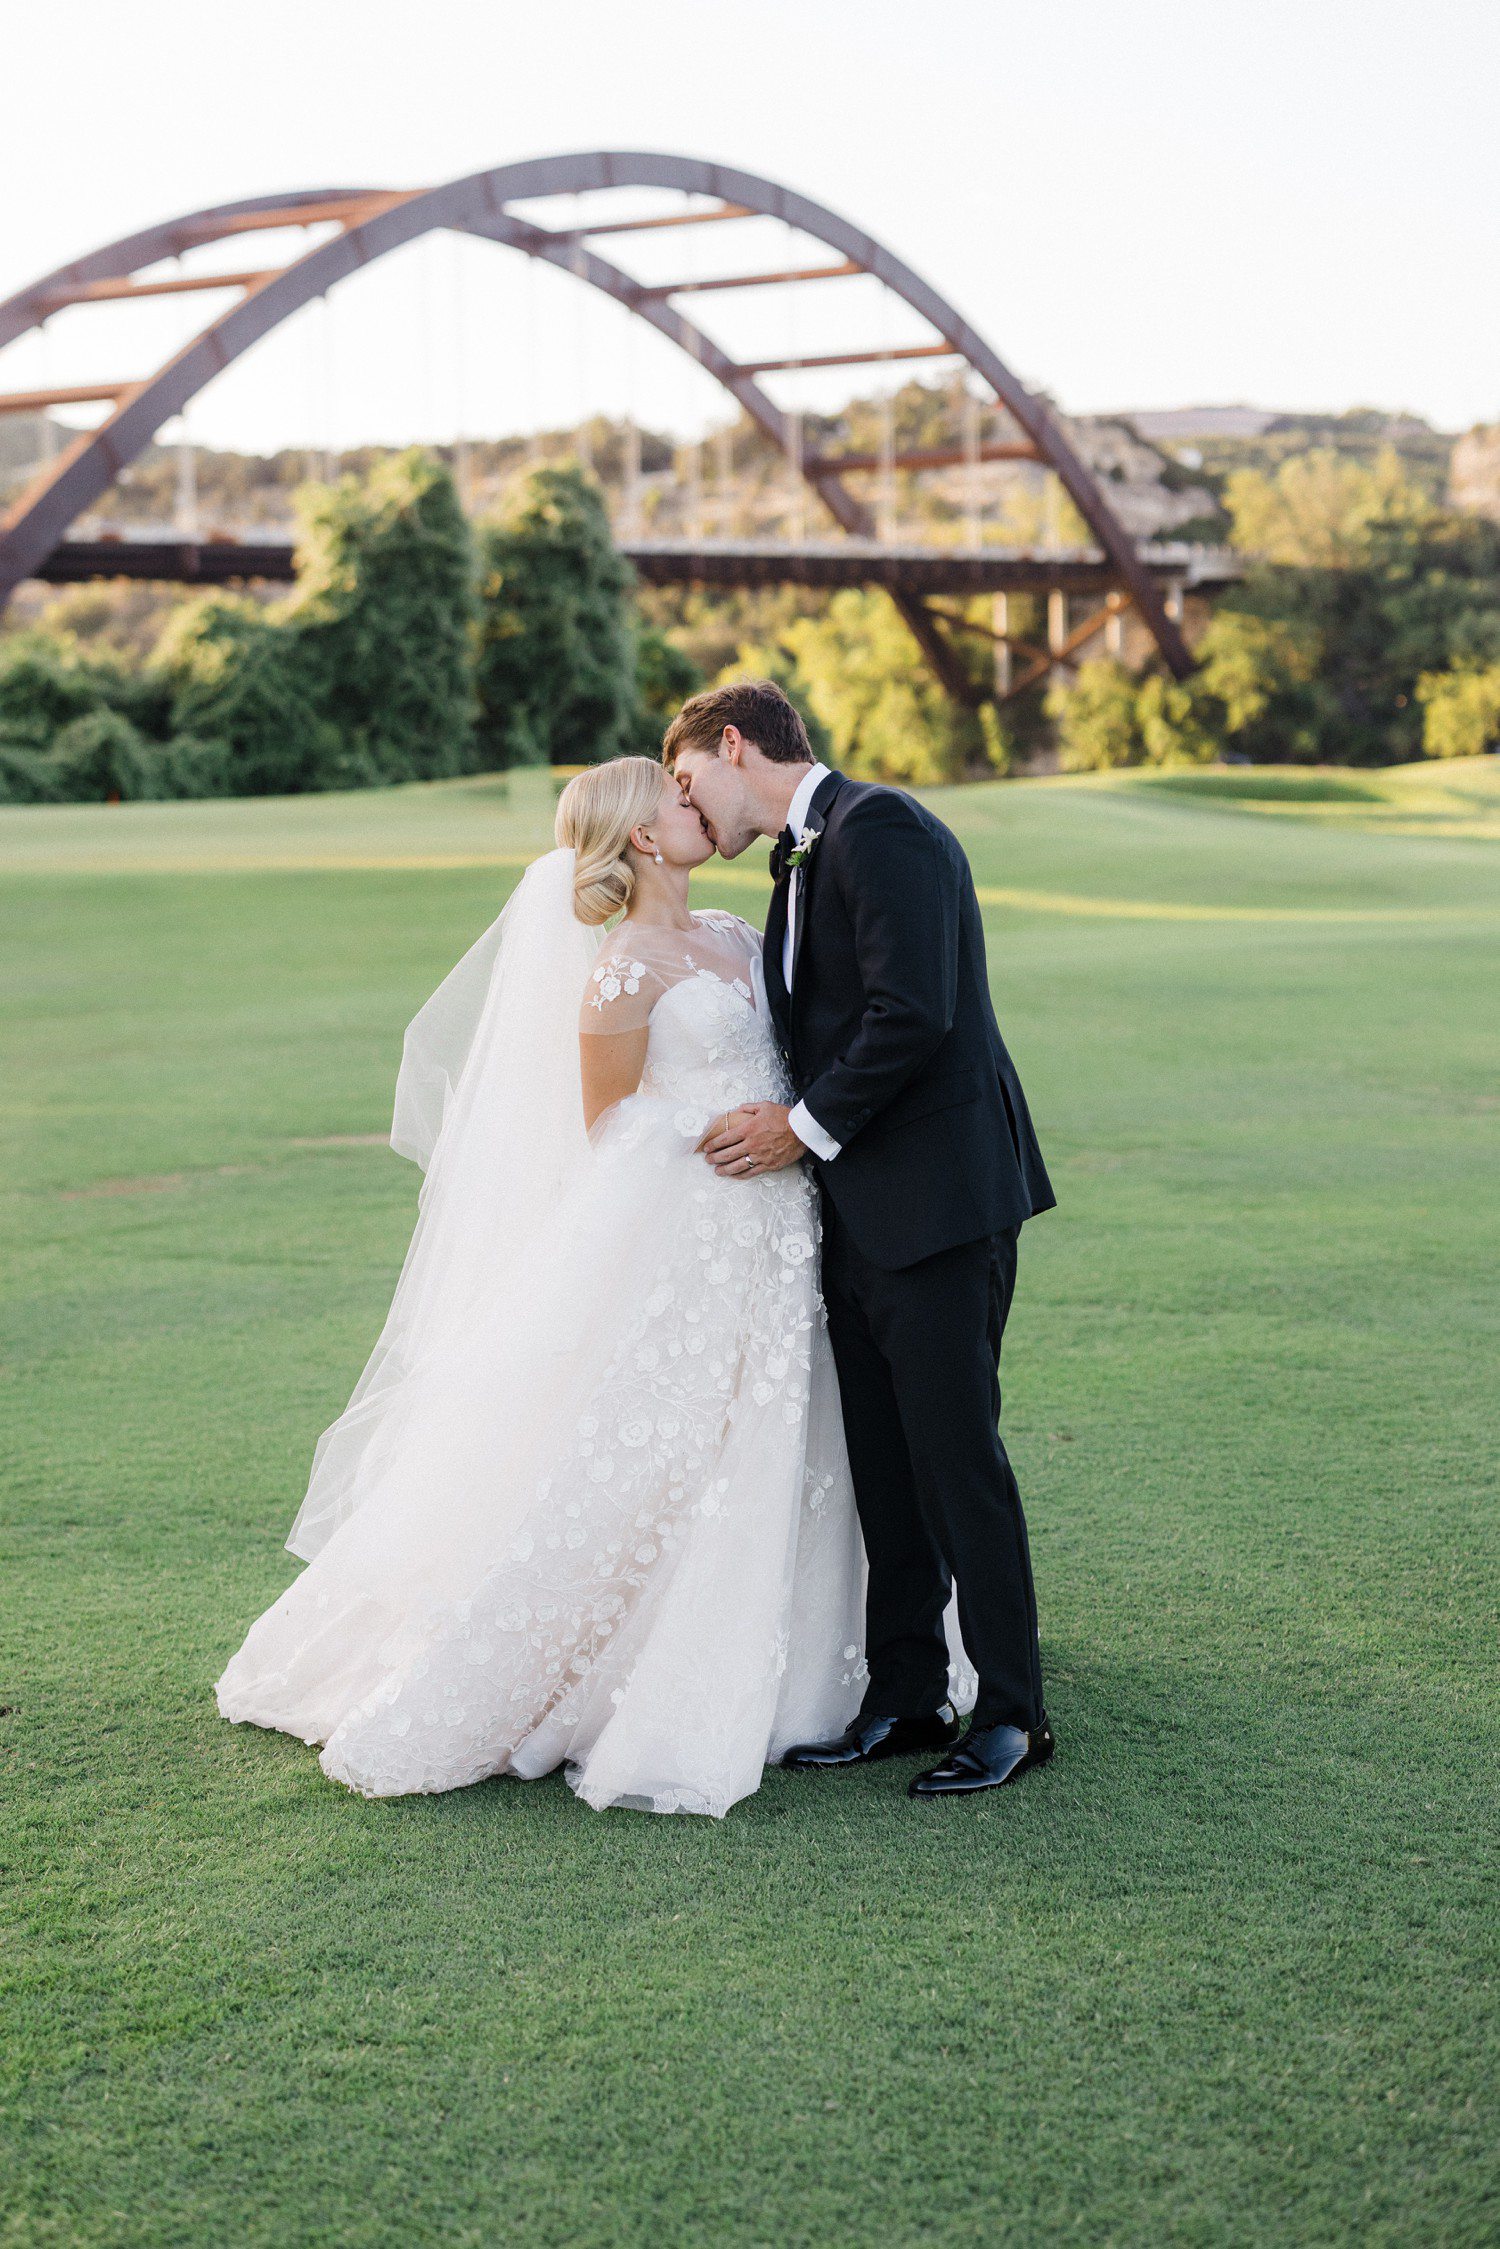 Wedding at Austin Country Club Pennybacker Bridge